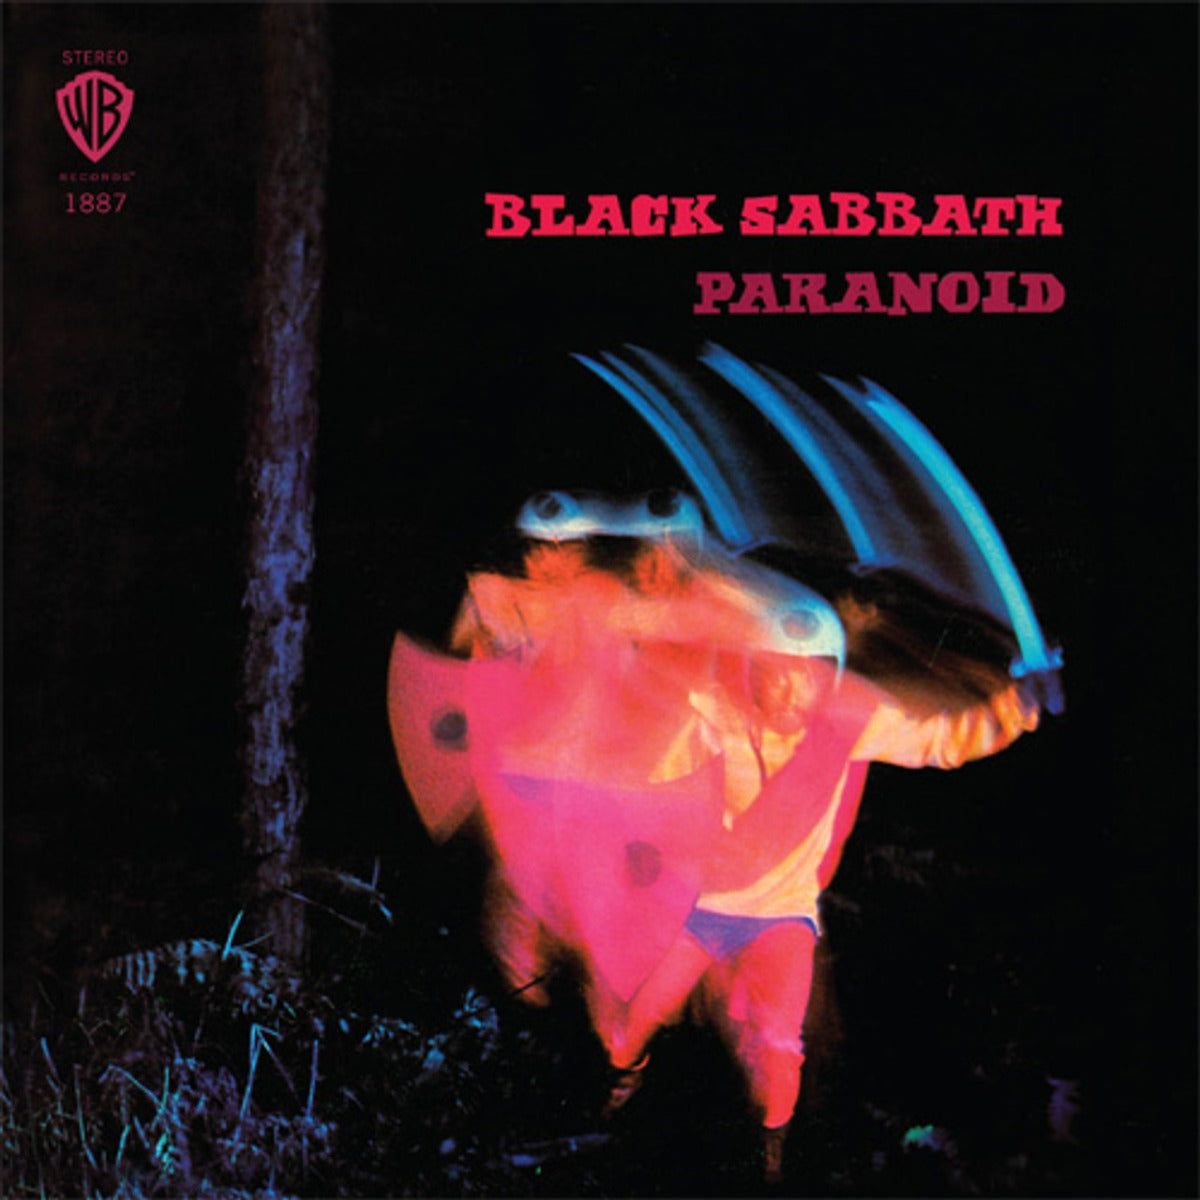 Black Sabbath - Paranoid (Deluxe Edition, 180 Gram Vinyl) (2 Lp's) - Vinyl